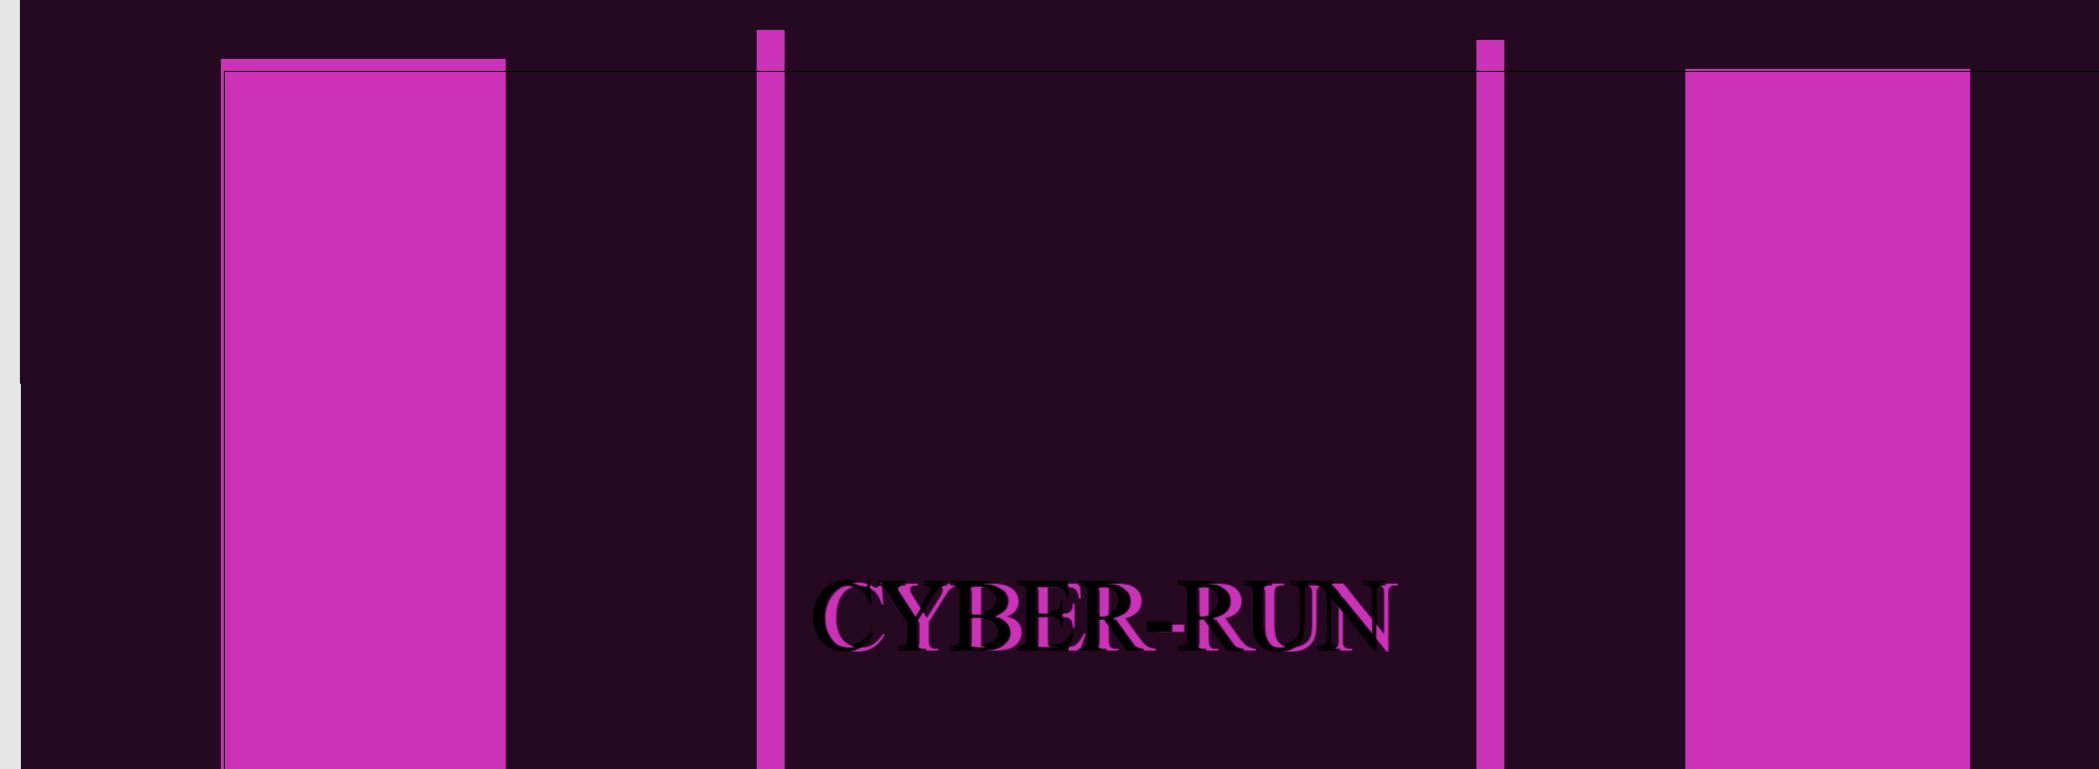 Cyberrun